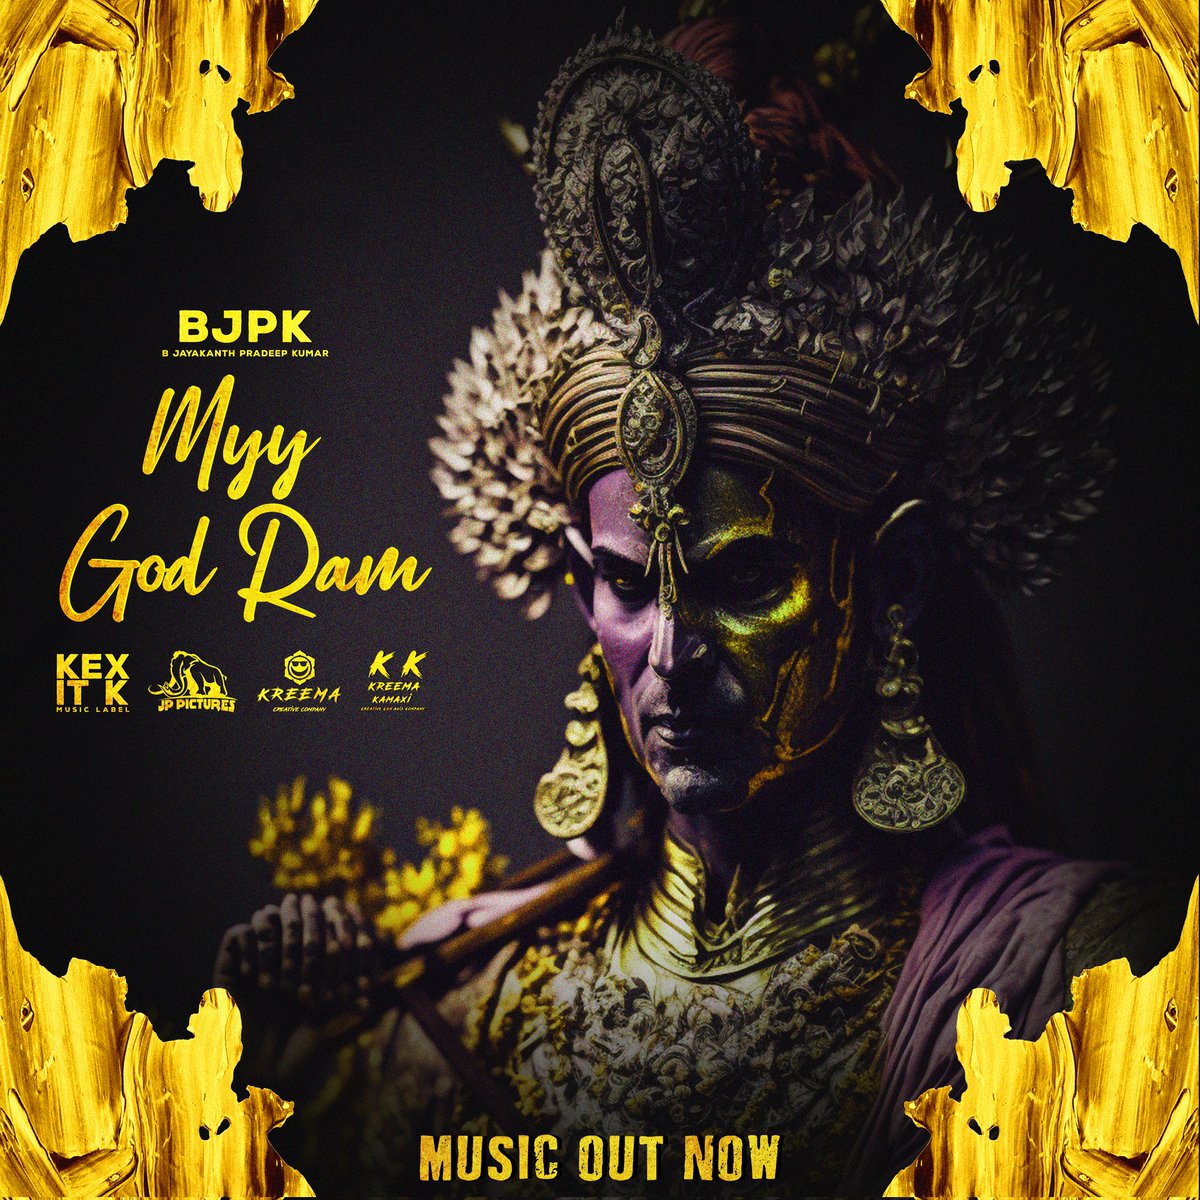 MUSIC OUT NOW 
#MyyGodRam
#BJPK #KEXITK   

youtu.be/d9jrmN7SxIU

#bjpkmusic #bjayakanthpradeepkumar #jayakanthpradeepkumar #jayakanthpradeep #bjpkedm #indiantrance #trance #MGR #newmusicalert  #musicoutnow #officialaudio